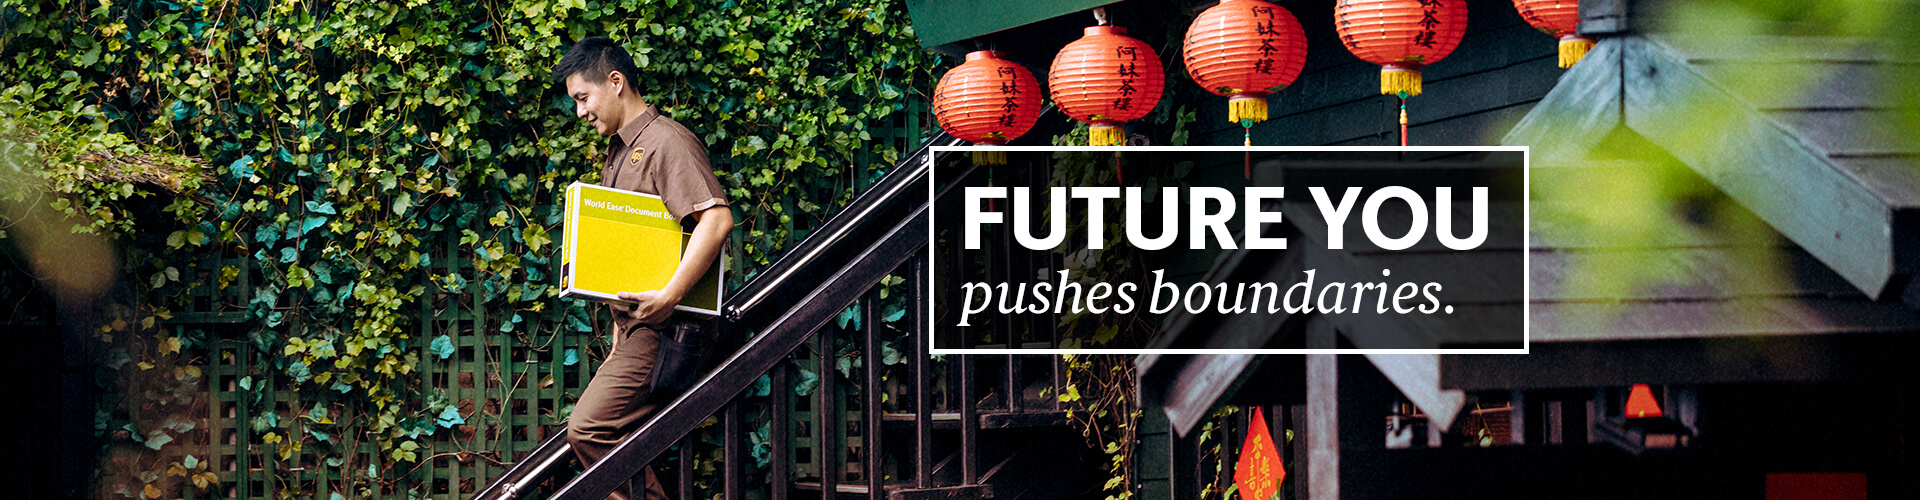 FUTURE YOU pushes boundaries.